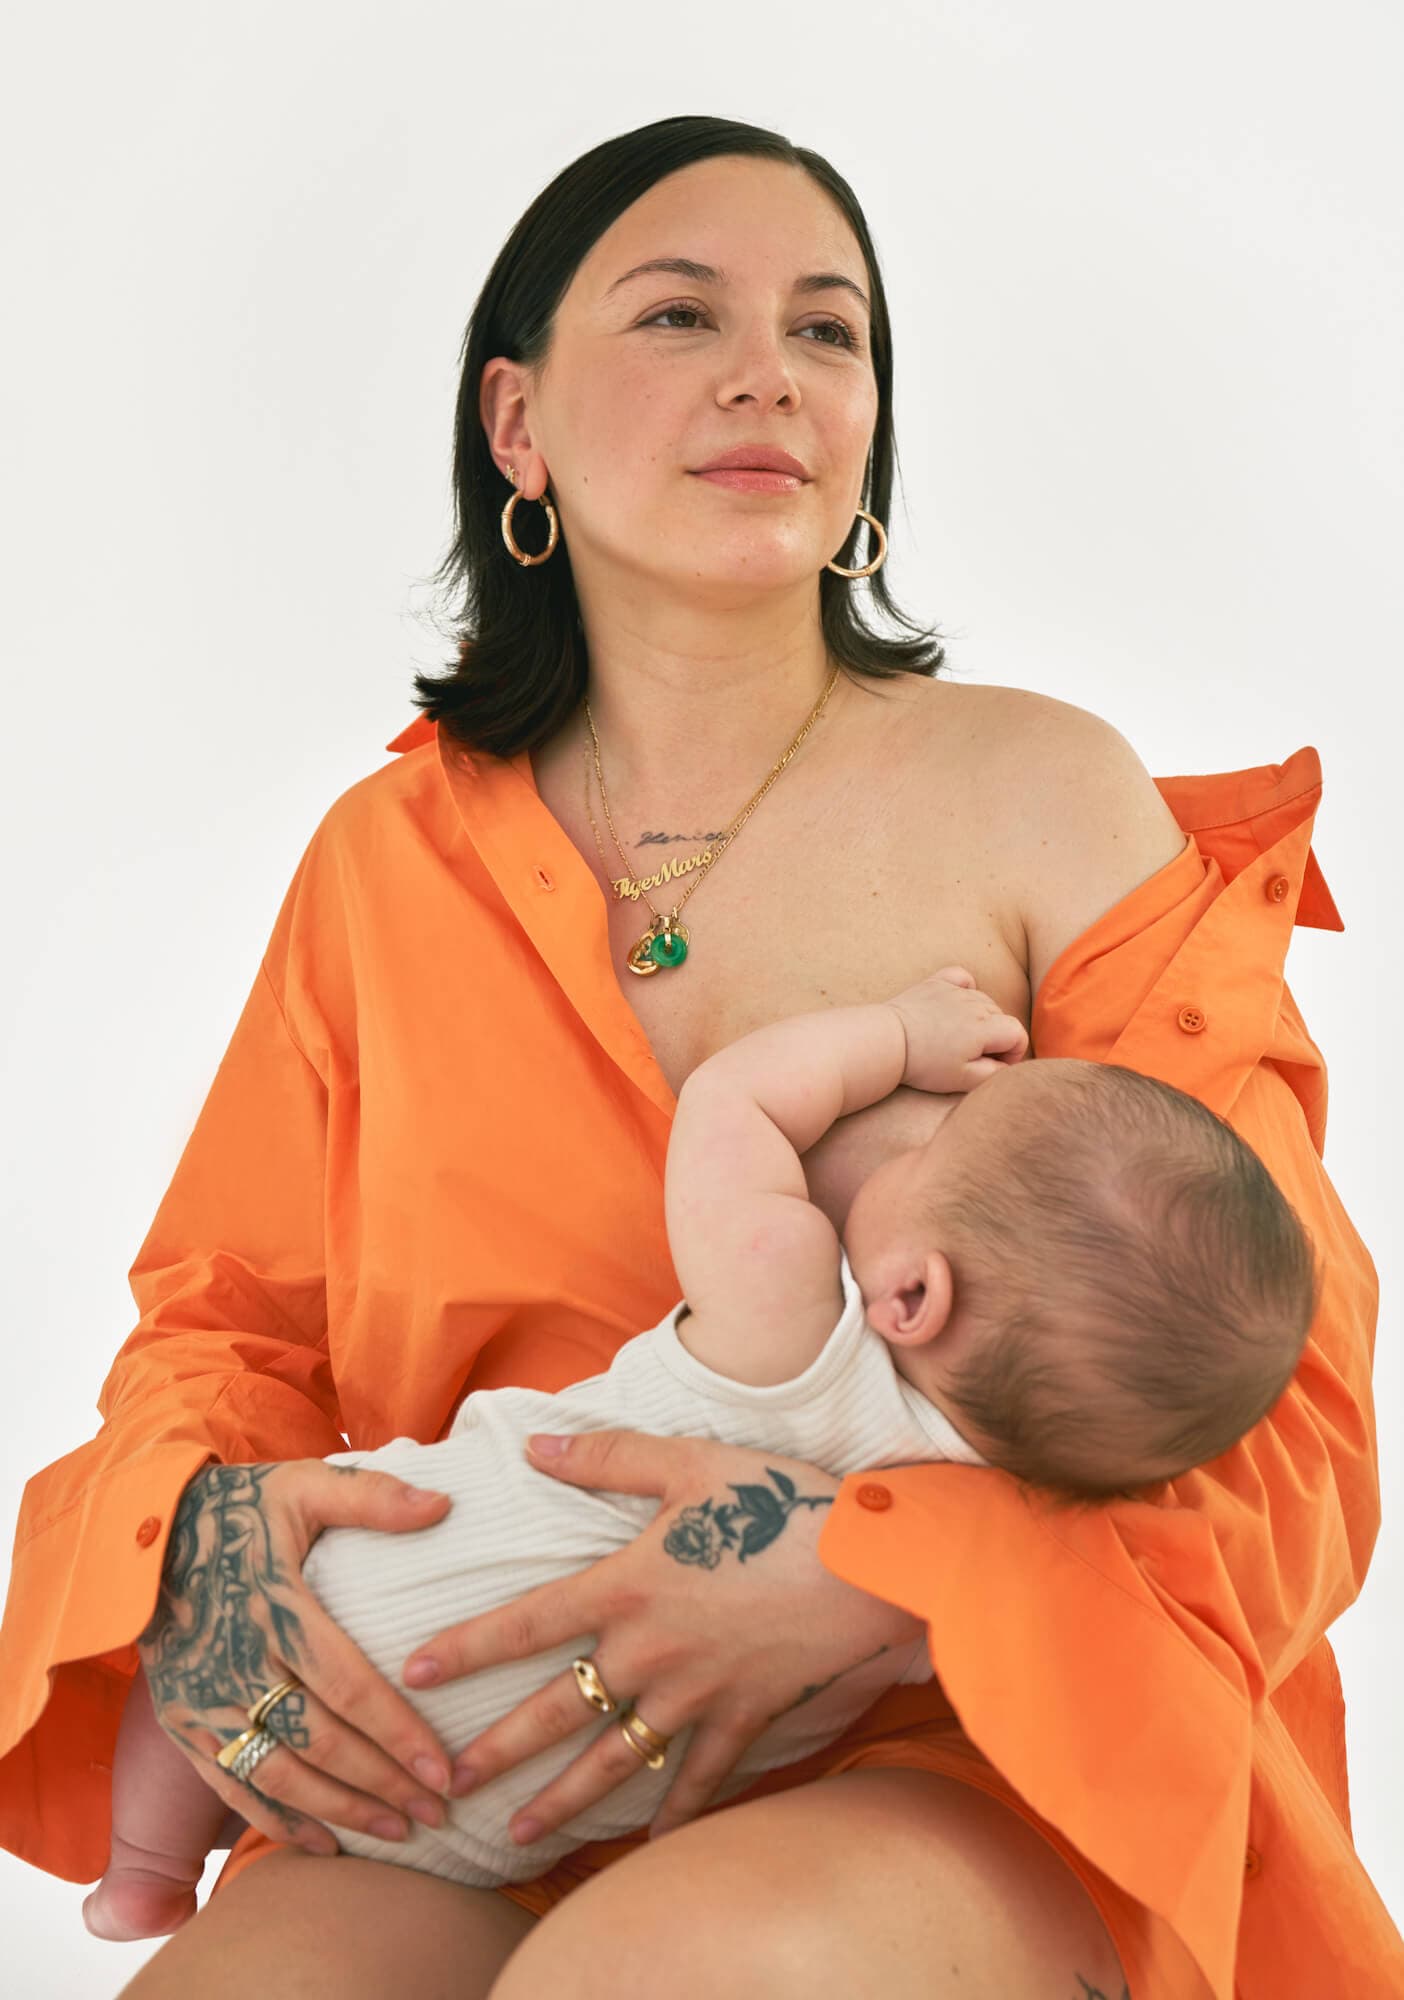 women breast feeding her child sitting down